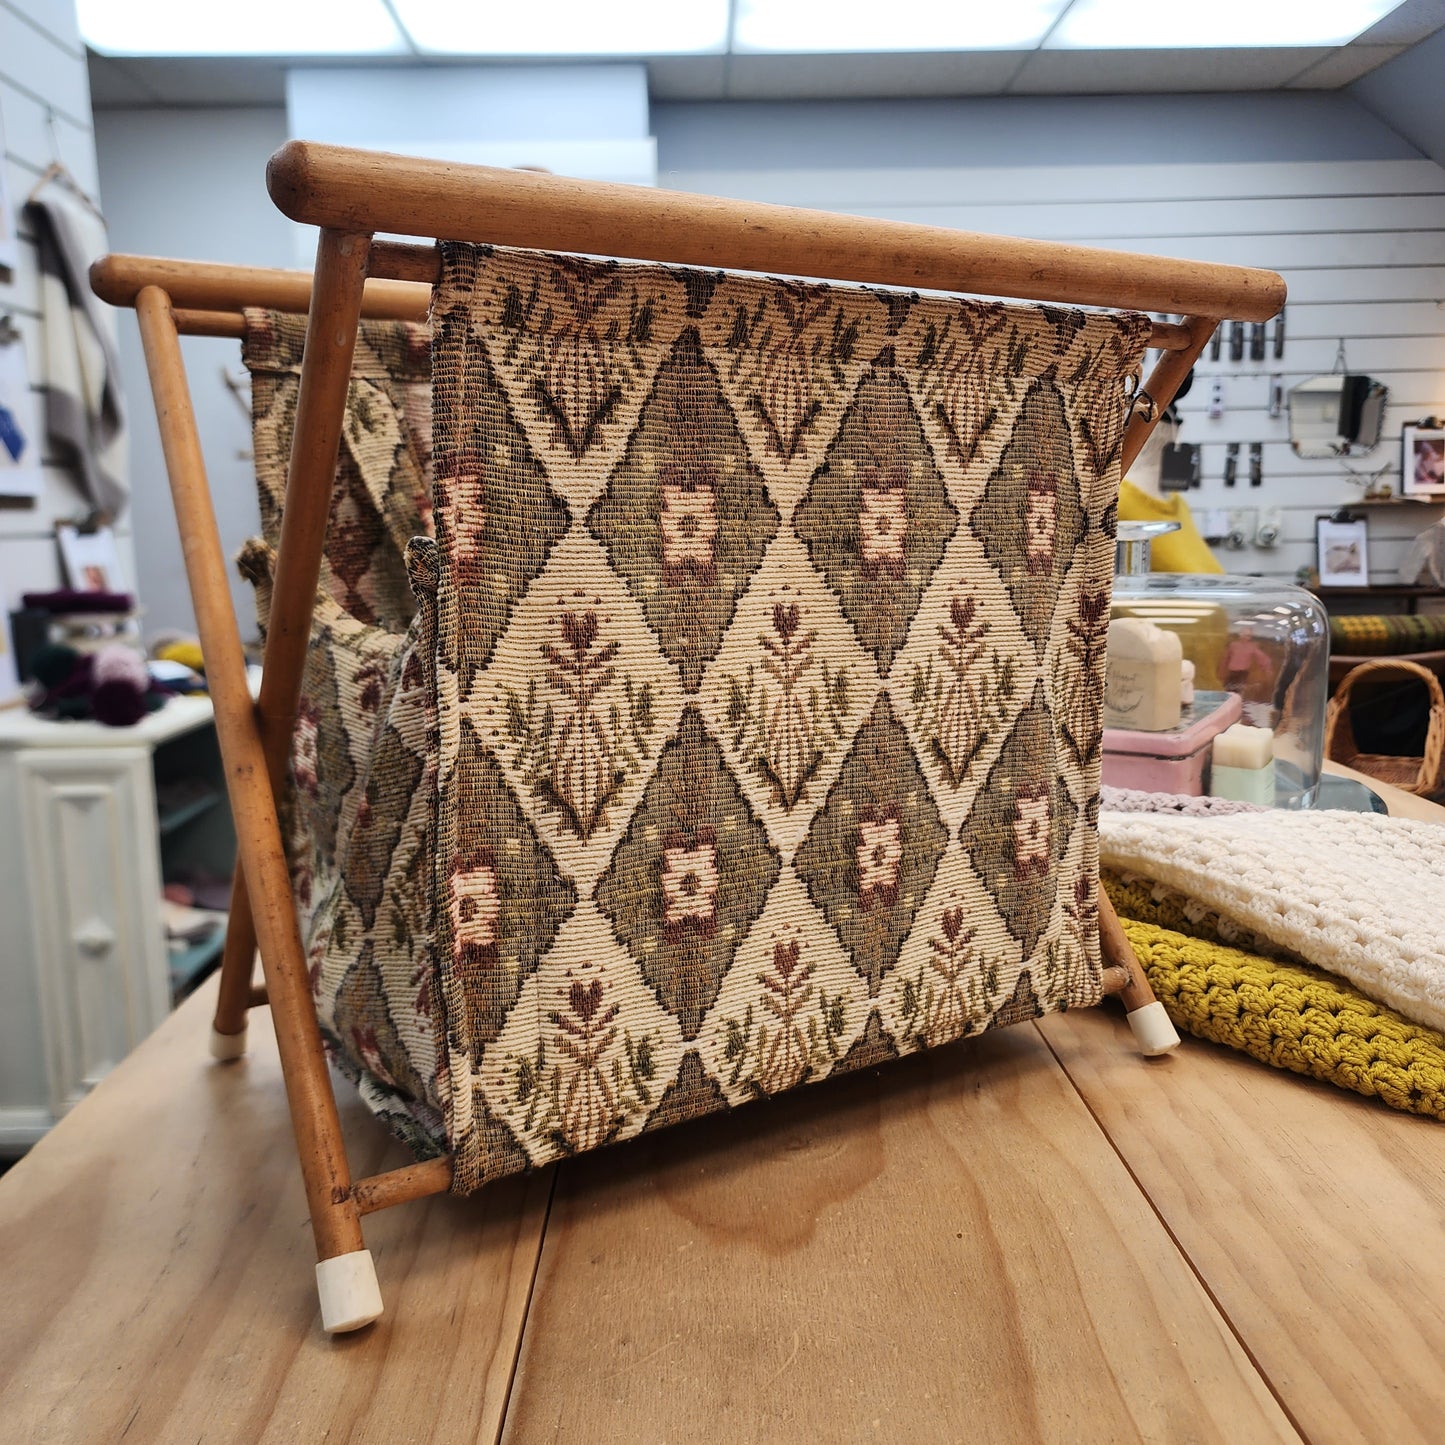 Vintage Tapestry Knitting Bag - Axminster